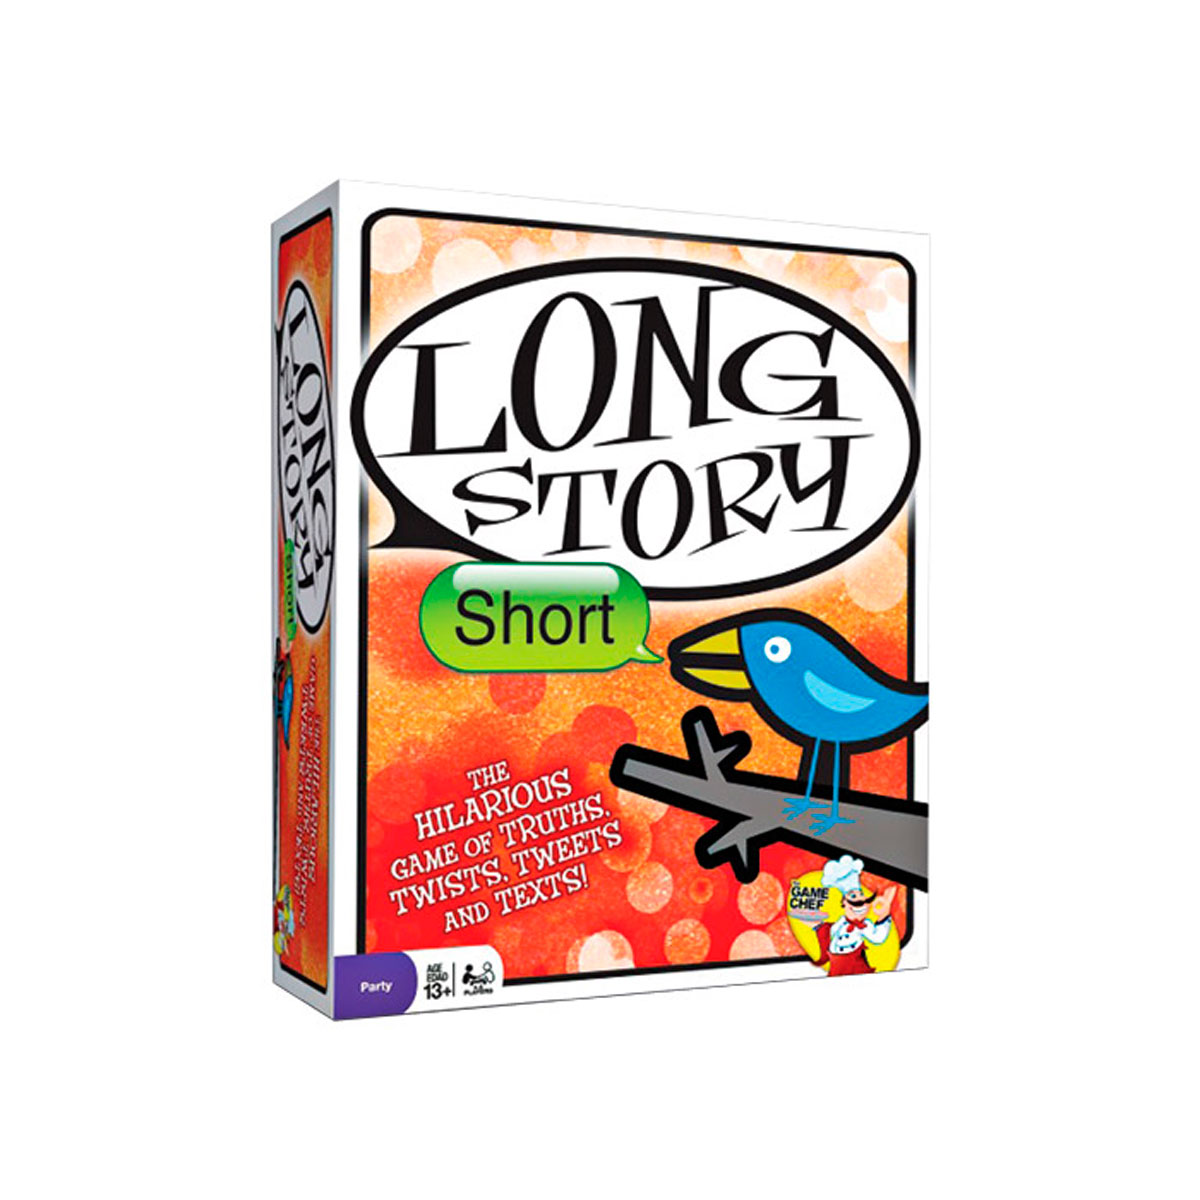 Long story short game. Long story short игра. Short a game. Long story short game Gallery. Игра long story short Alex.